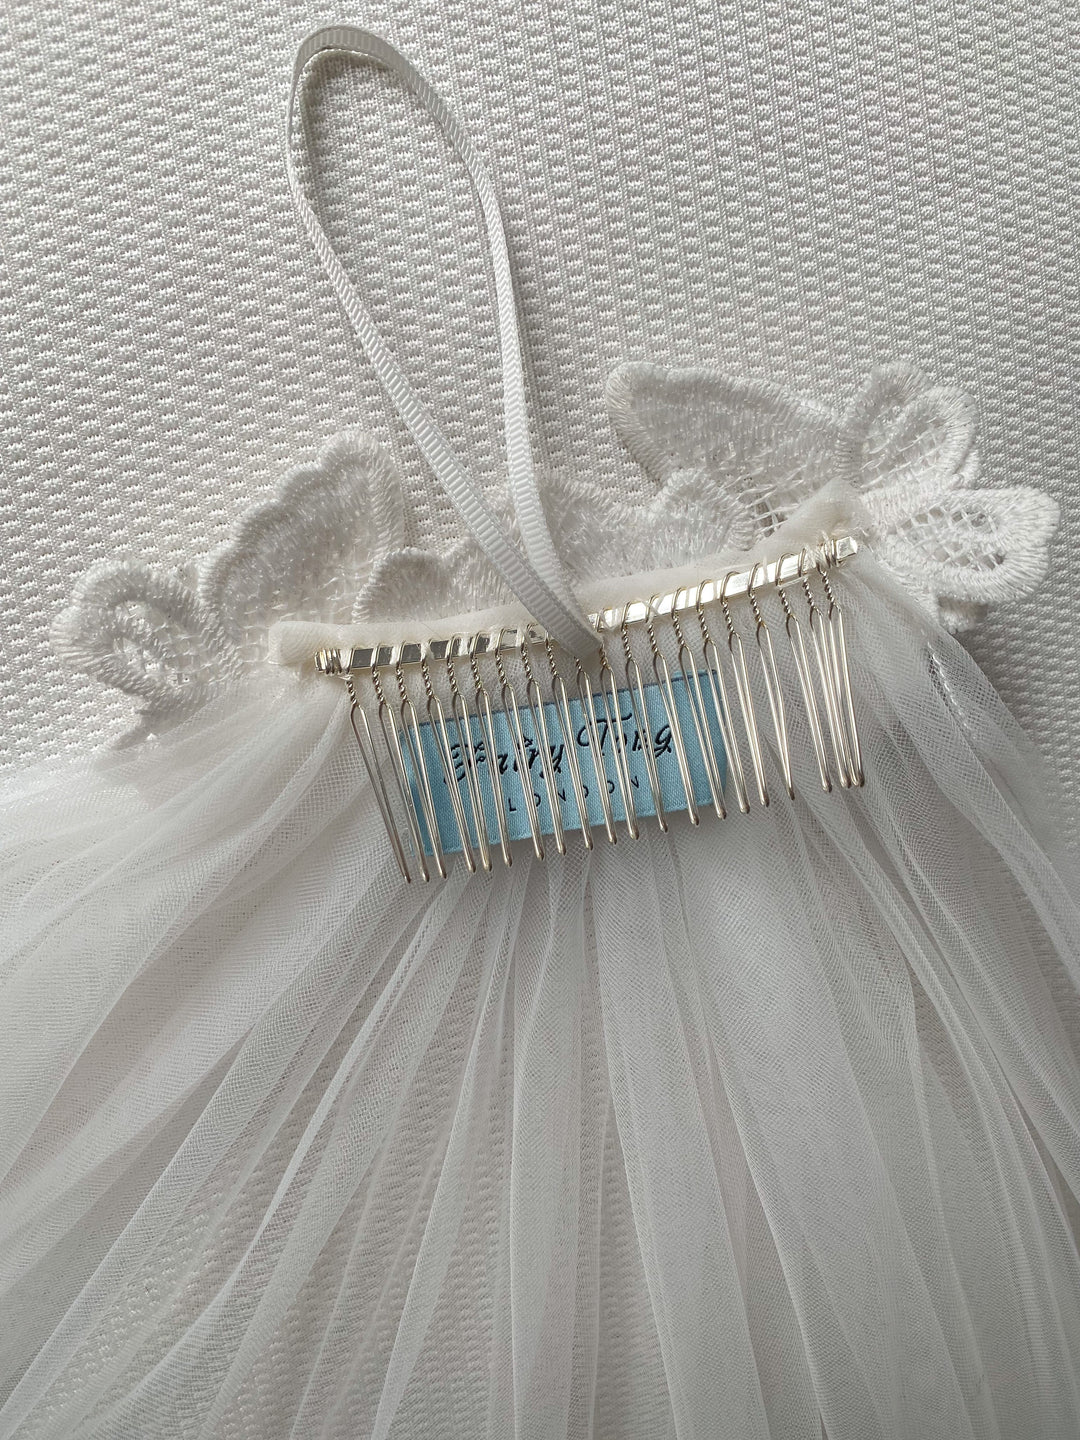 Fairy Tong Veil One Size / Diamond White Aurora Butterfly Bridal Veil - Fingertip